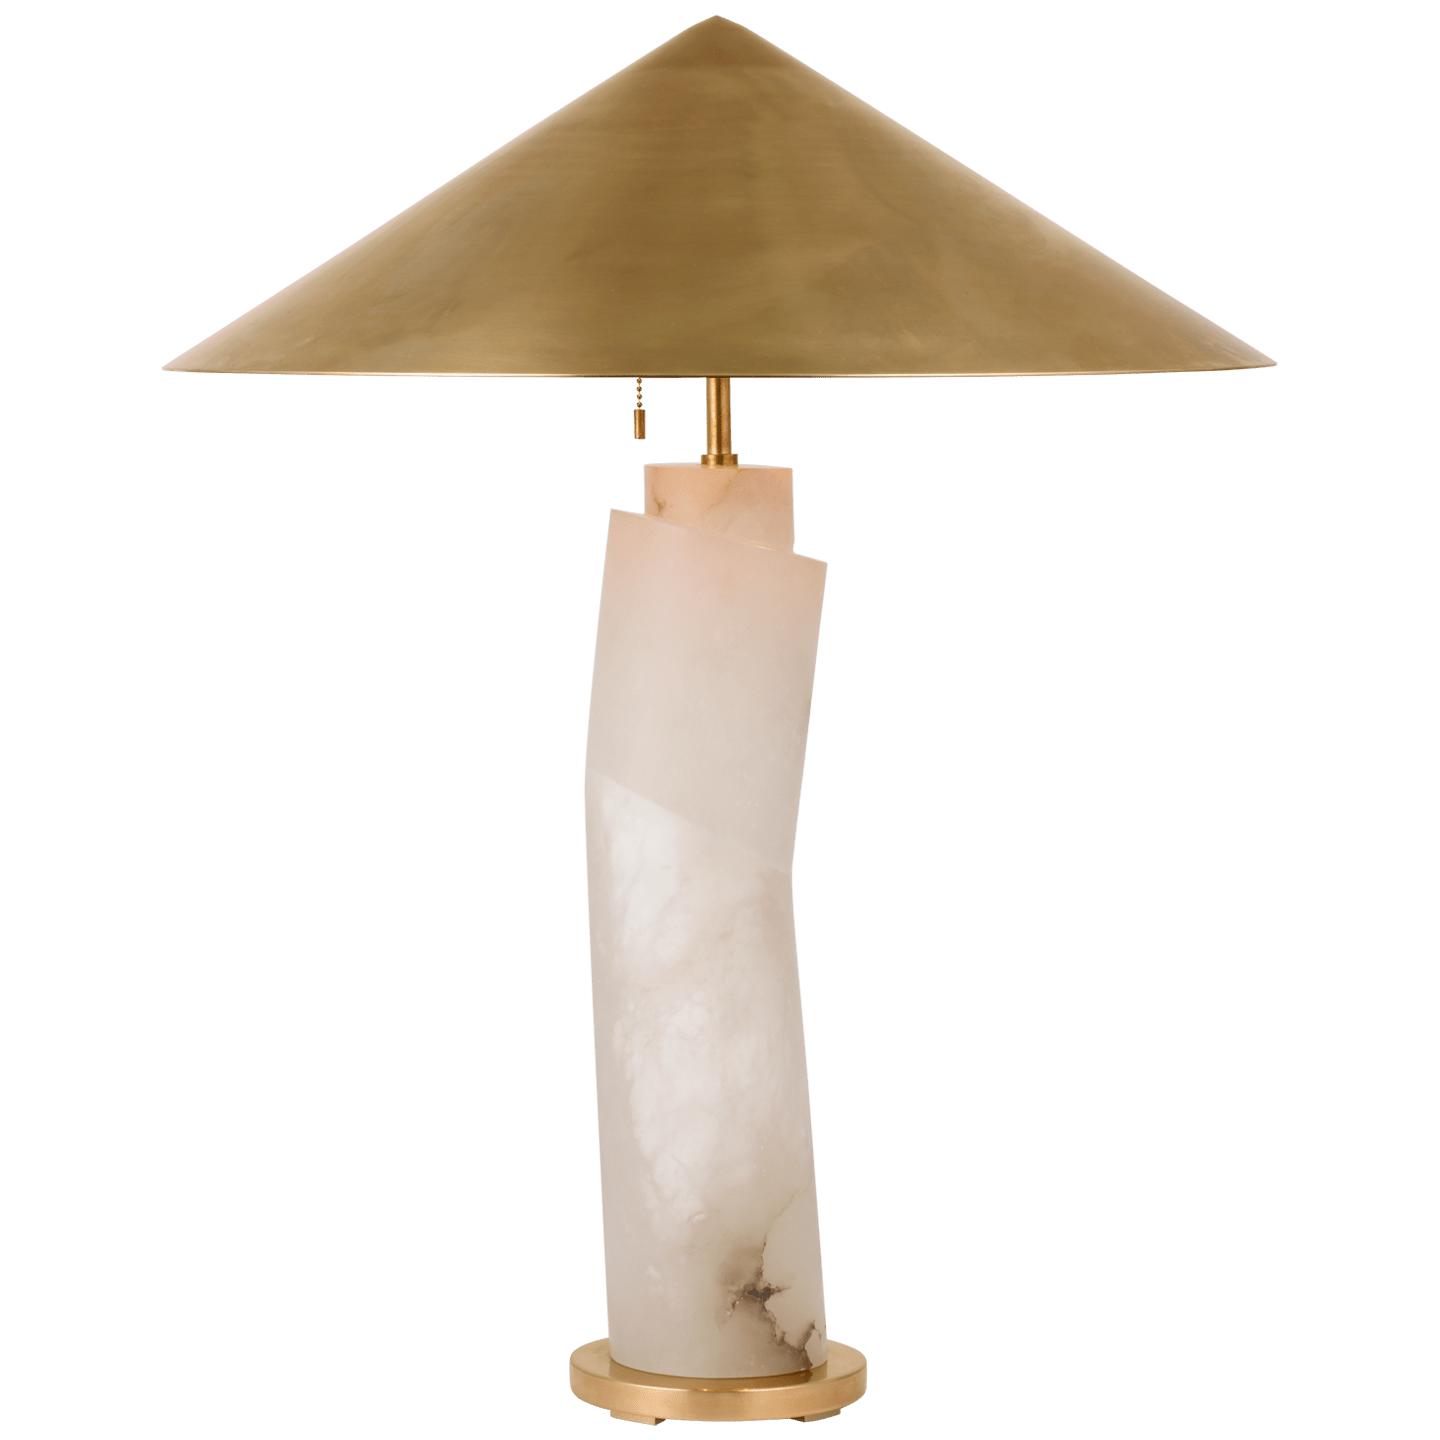 Купить Настольная лампа Lemaire Large Table Lamp в интернет-магазине roooms.ru